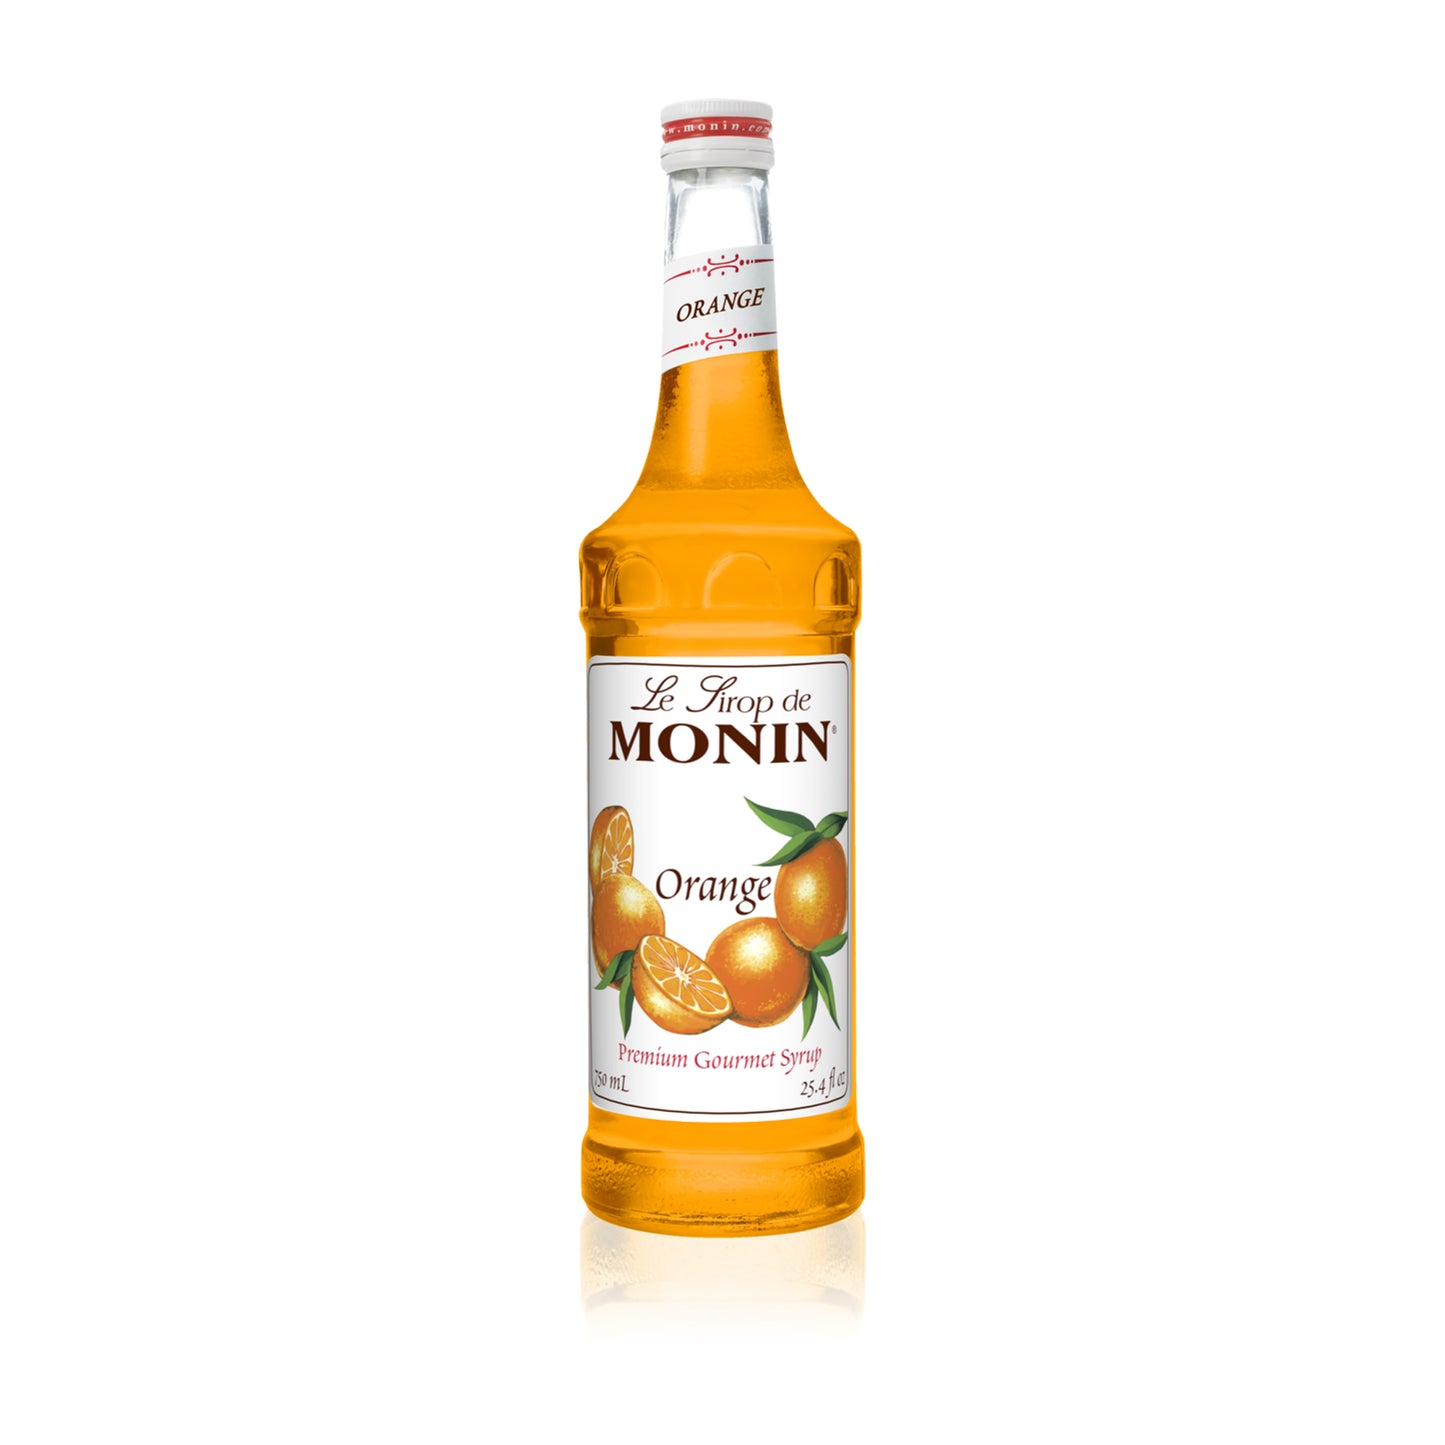 Orange Monin Syrup